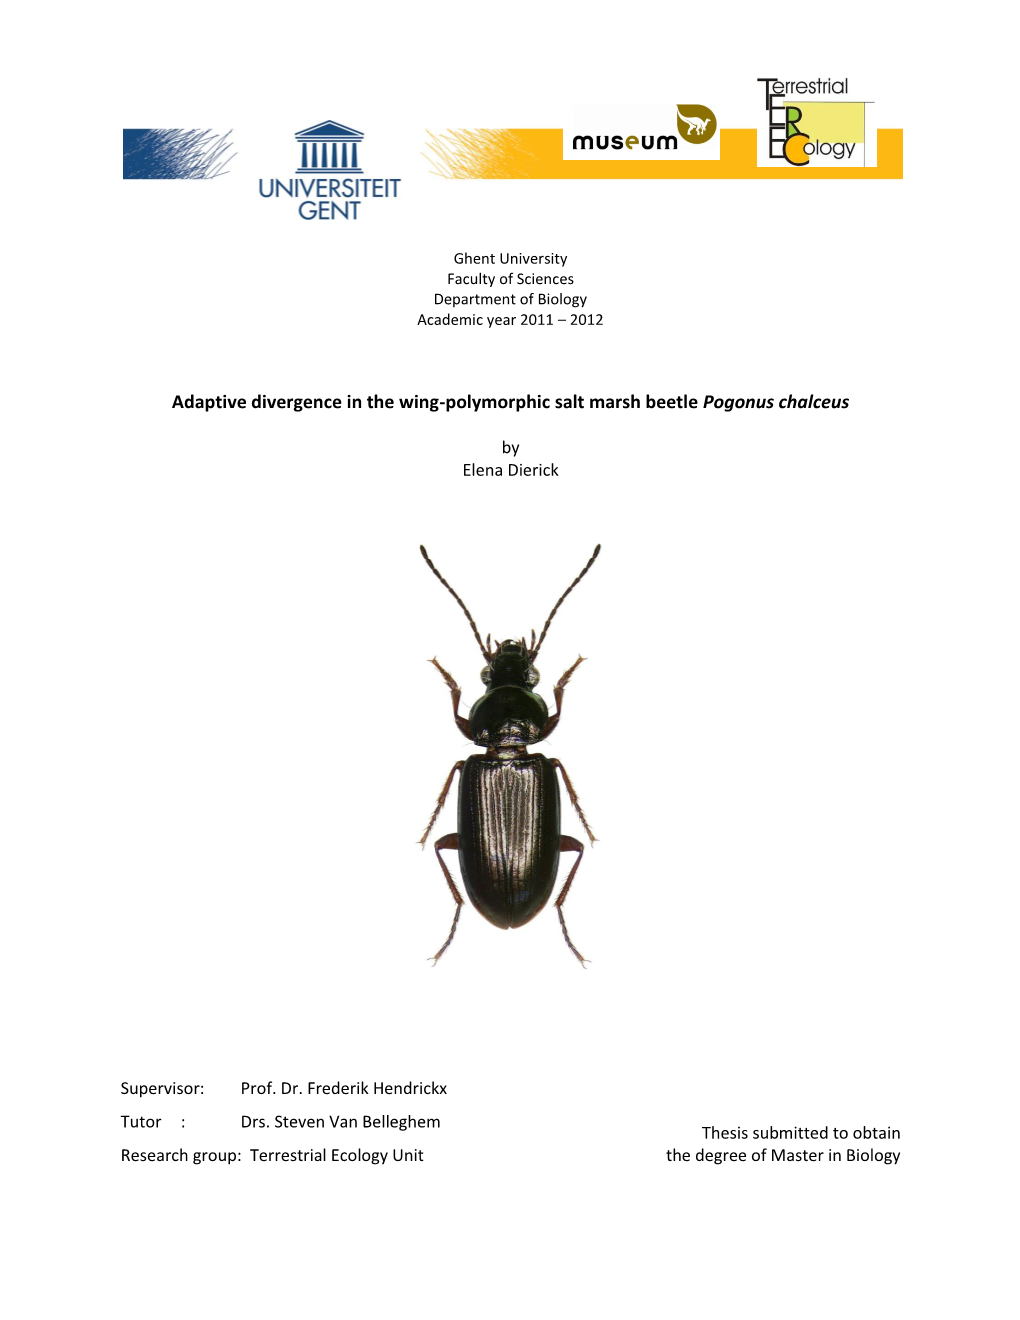 Adaptive Divergence in the Wing-Polymorphic Salt Marsh Beetle Pogonus Chalceus